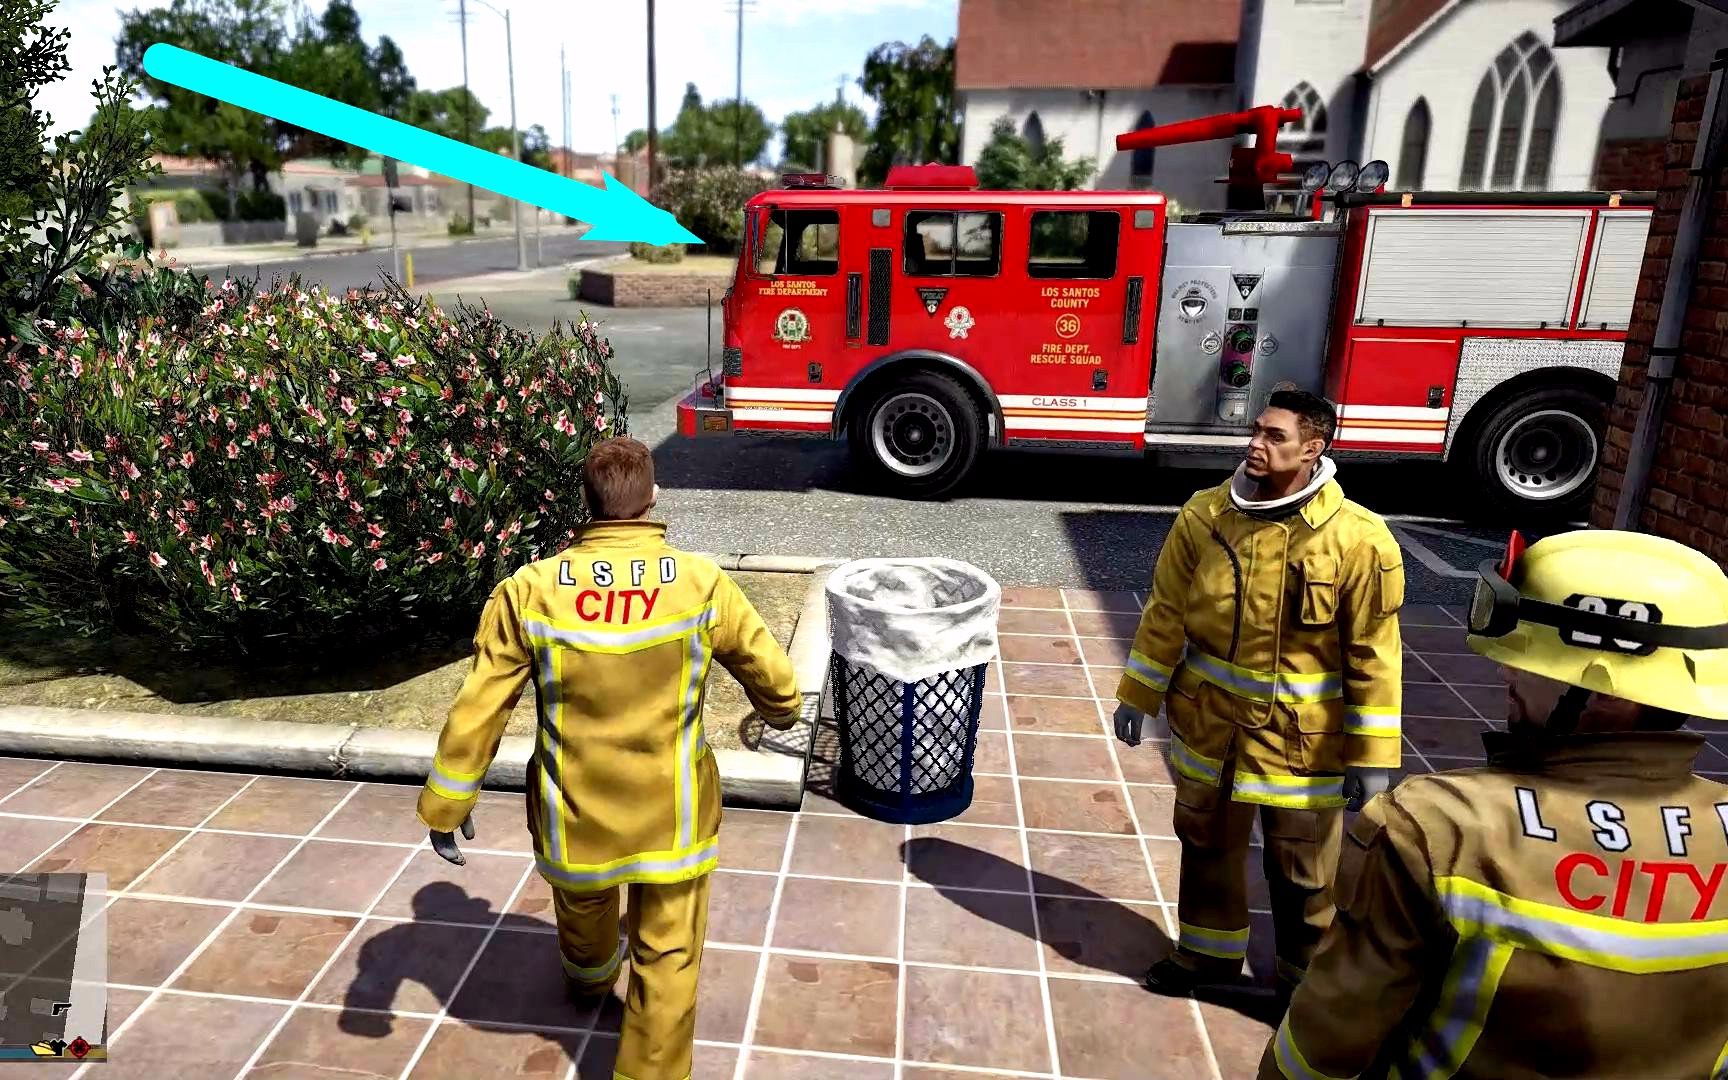 Gta5 假扮消防员把消防车偷走 猜猜其他消防员会有啥搞笑反应 哔哩哔哩 つロ干杯 Bilibili